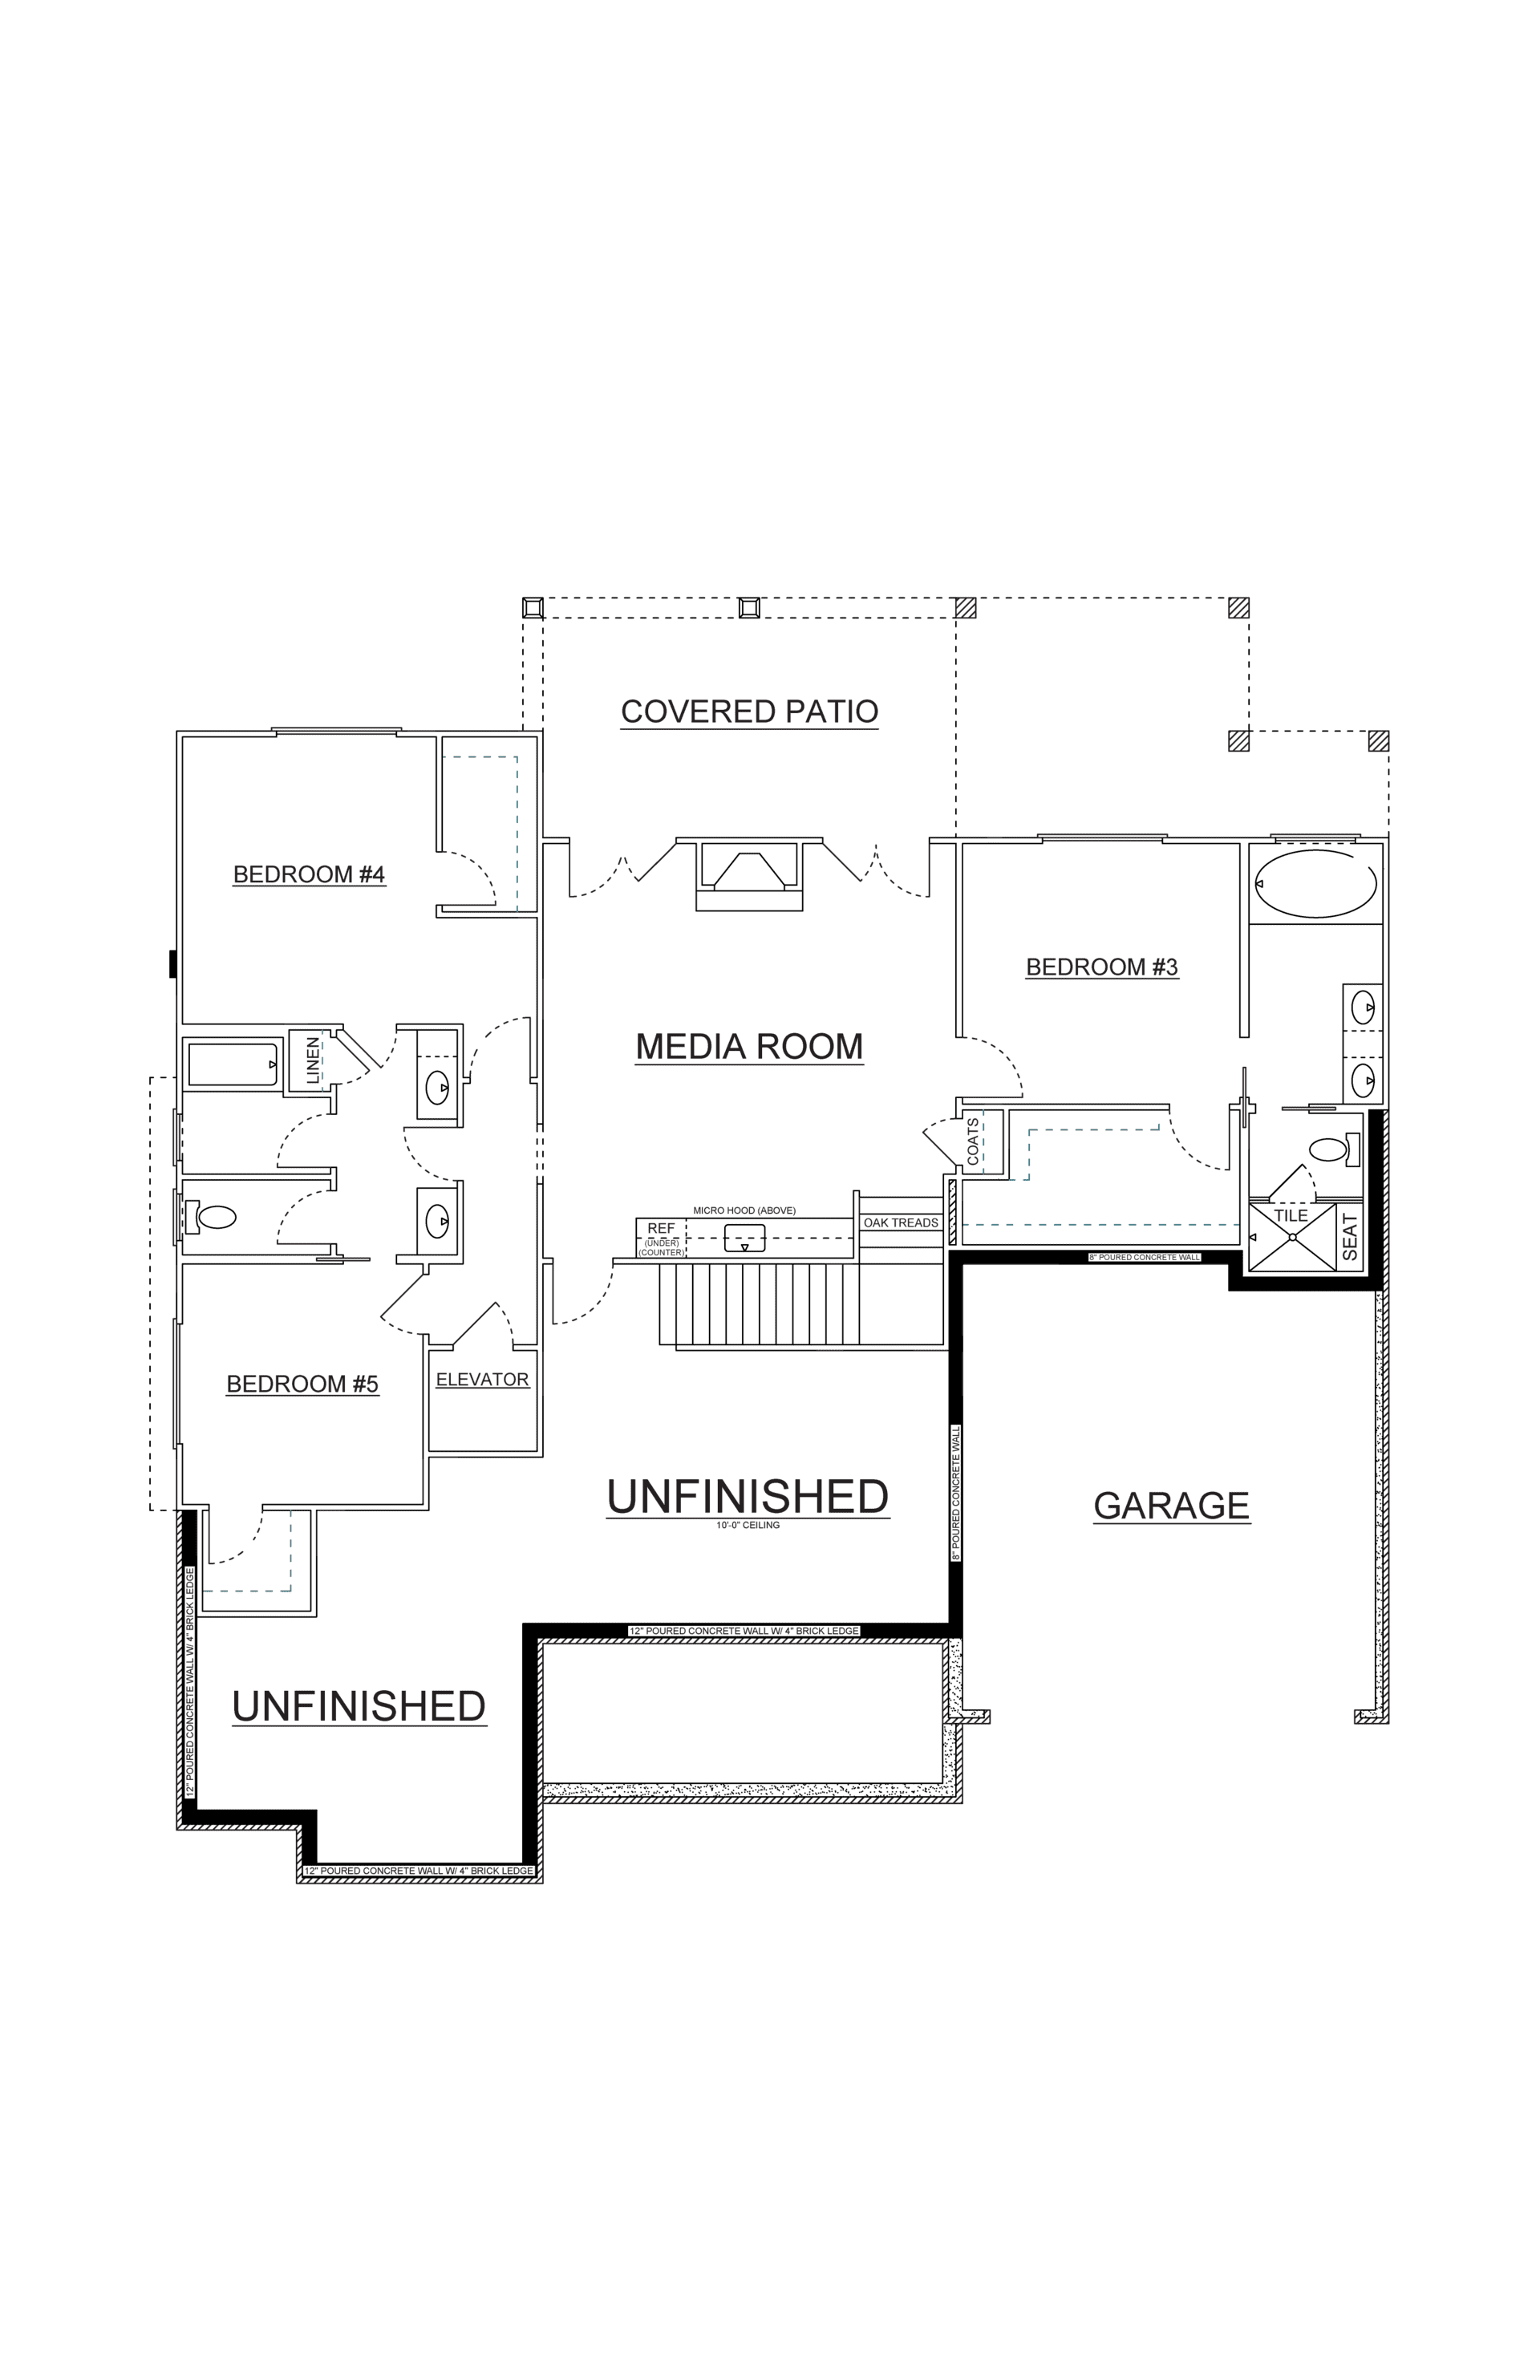 Harborside Floor Plan with a basement or elevator